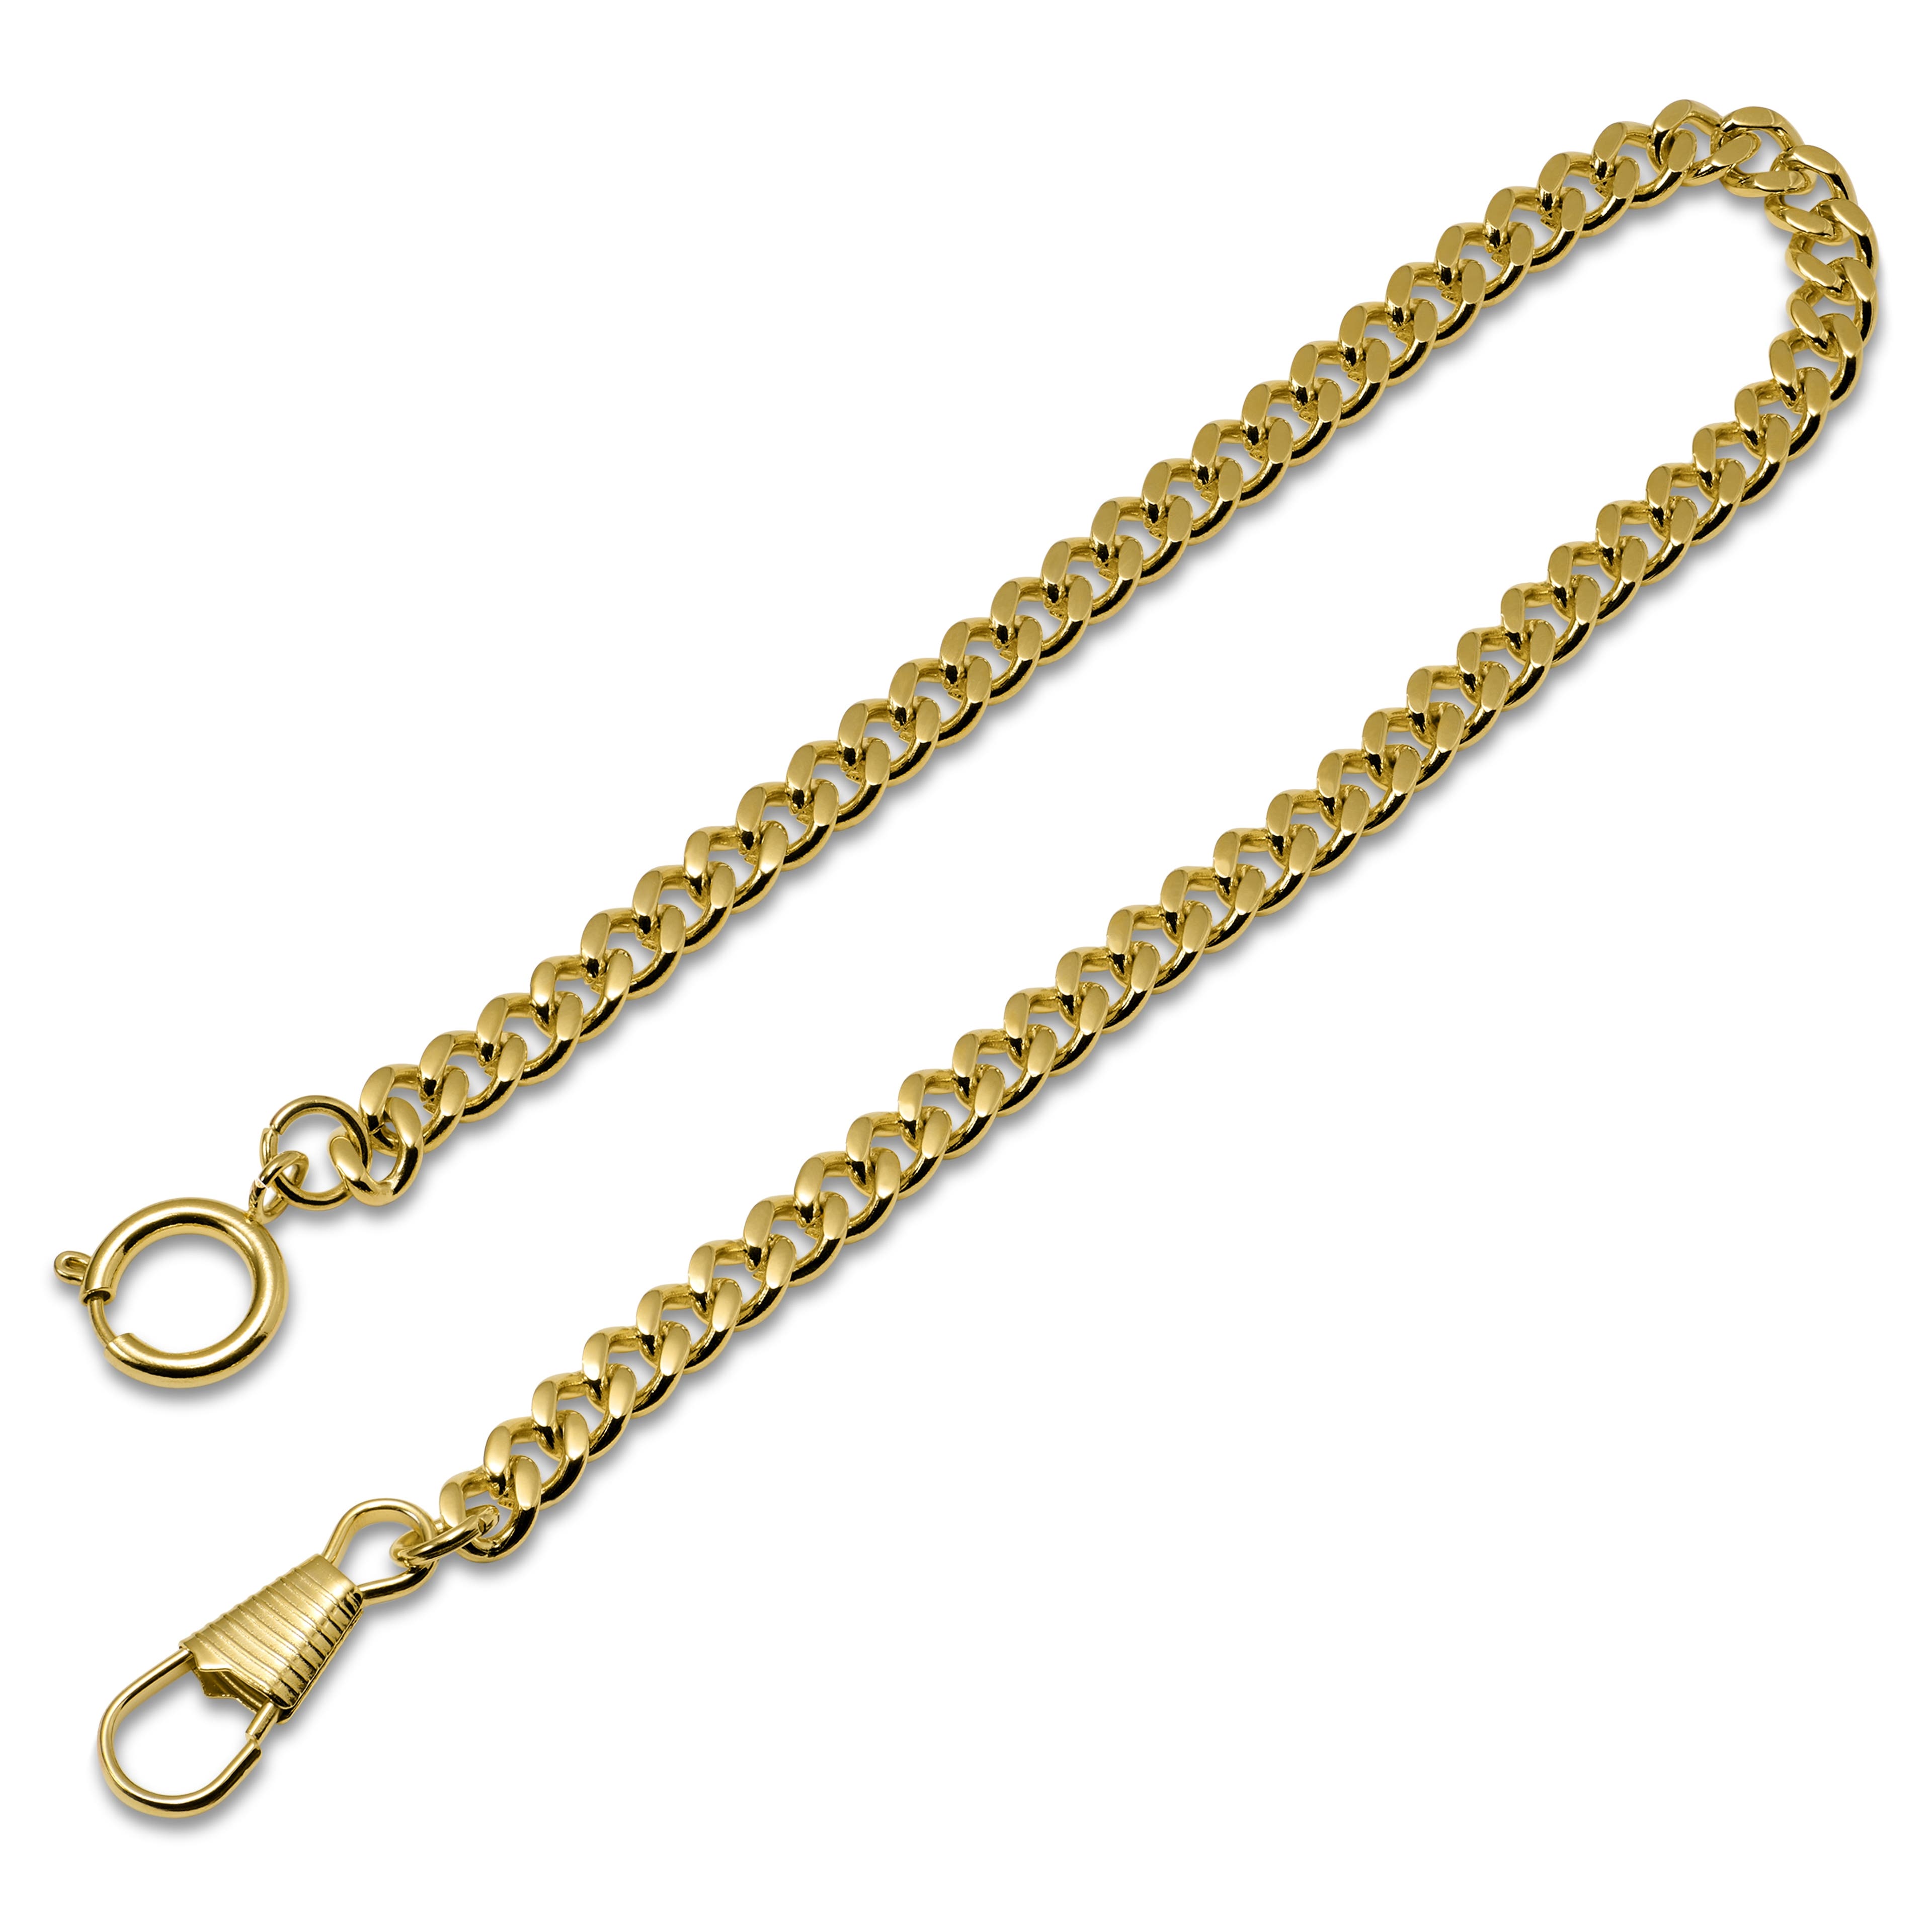 Cadena para reloj de bolsillo con anillo de resorte de acero dorada | stock! | Seizmont